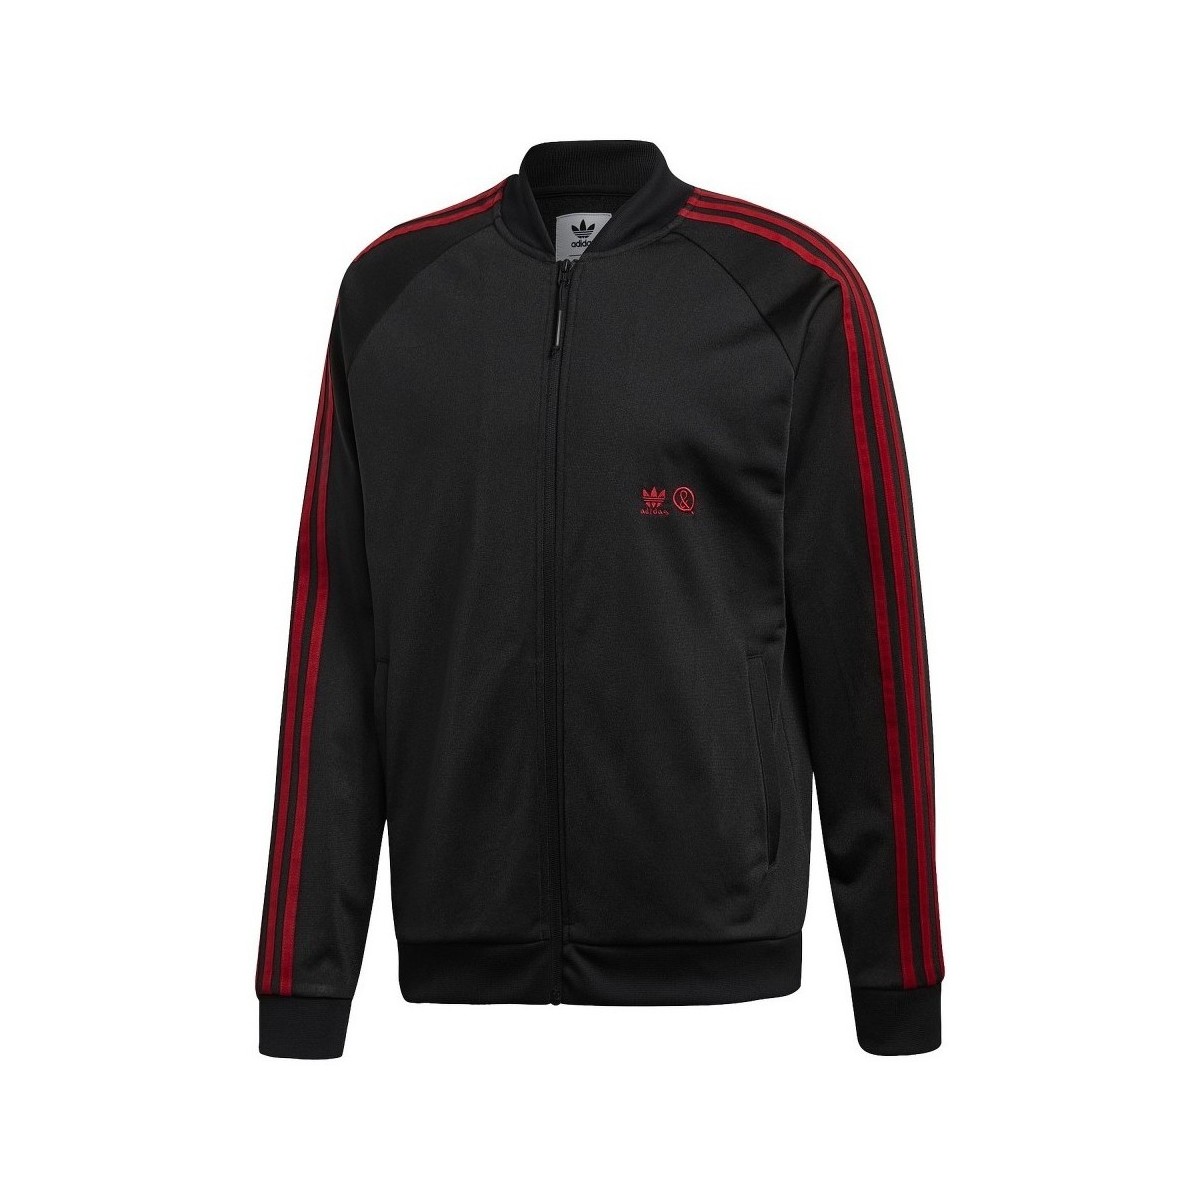 Textiel Heren Trainings jassen adidas Originals UA&SONS Track Jacket Zwart